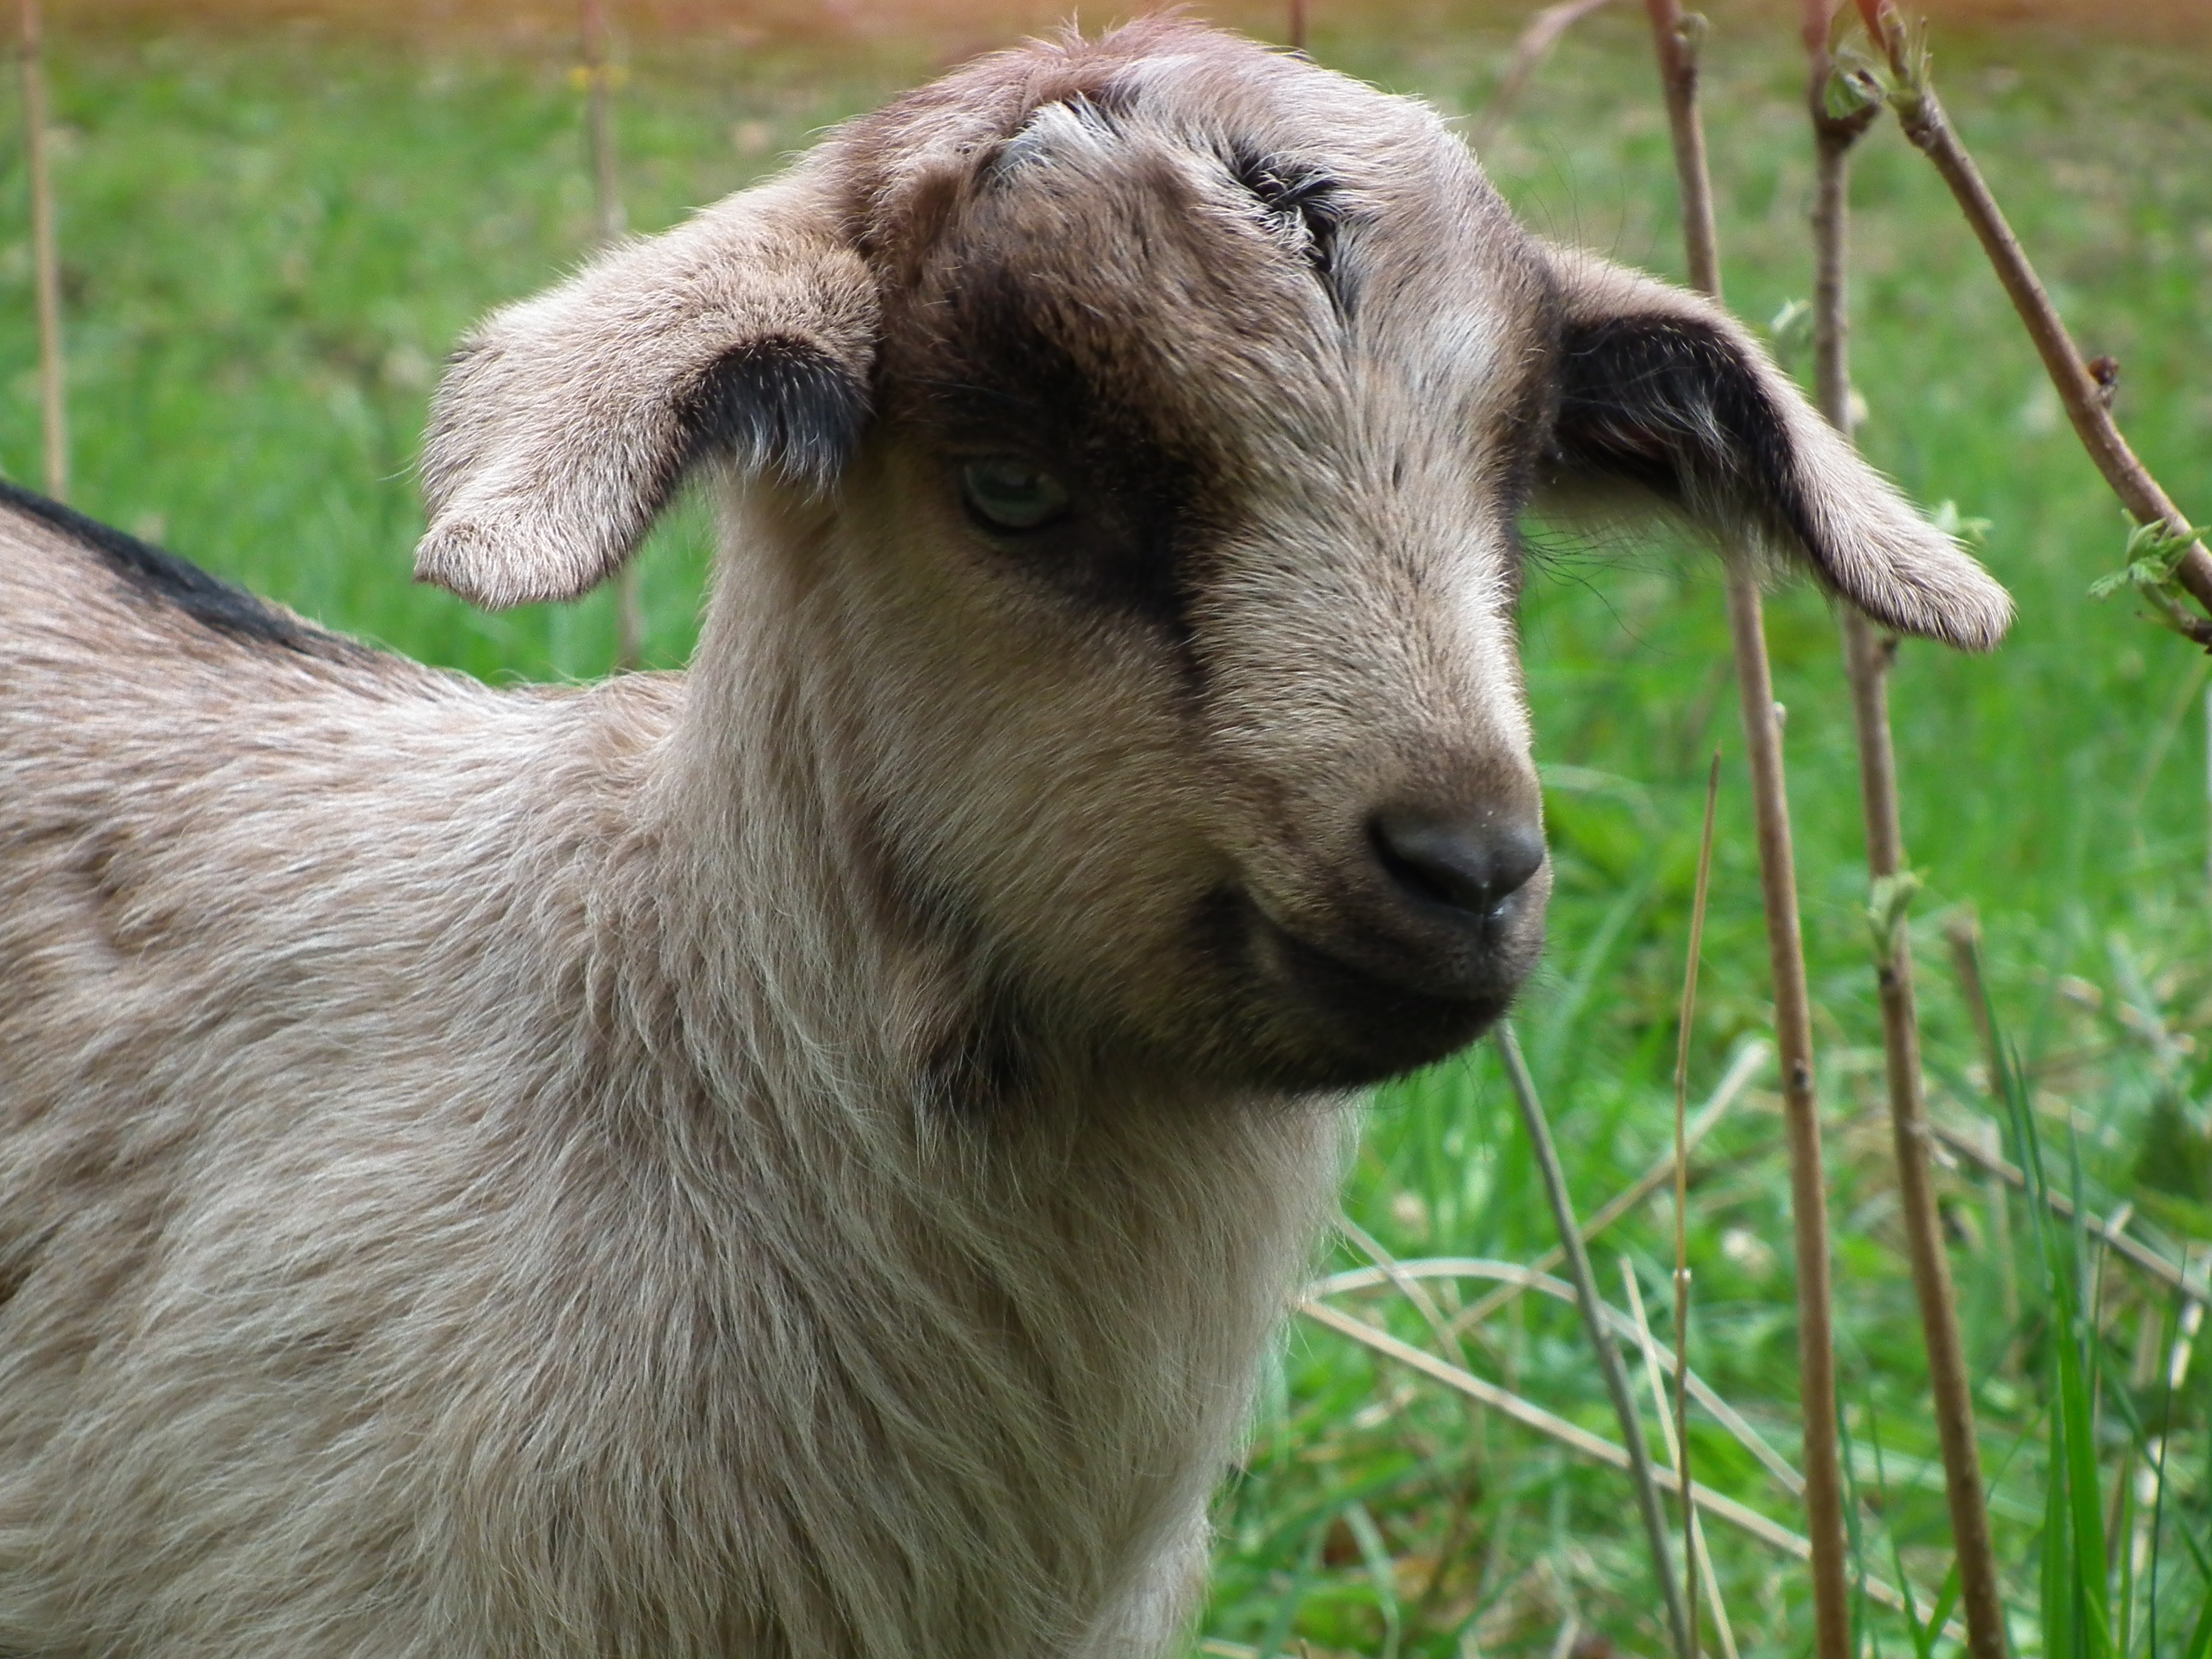 Animal, Cute, Grass, Goat, Pasture, Lamb, animal themes, one animal